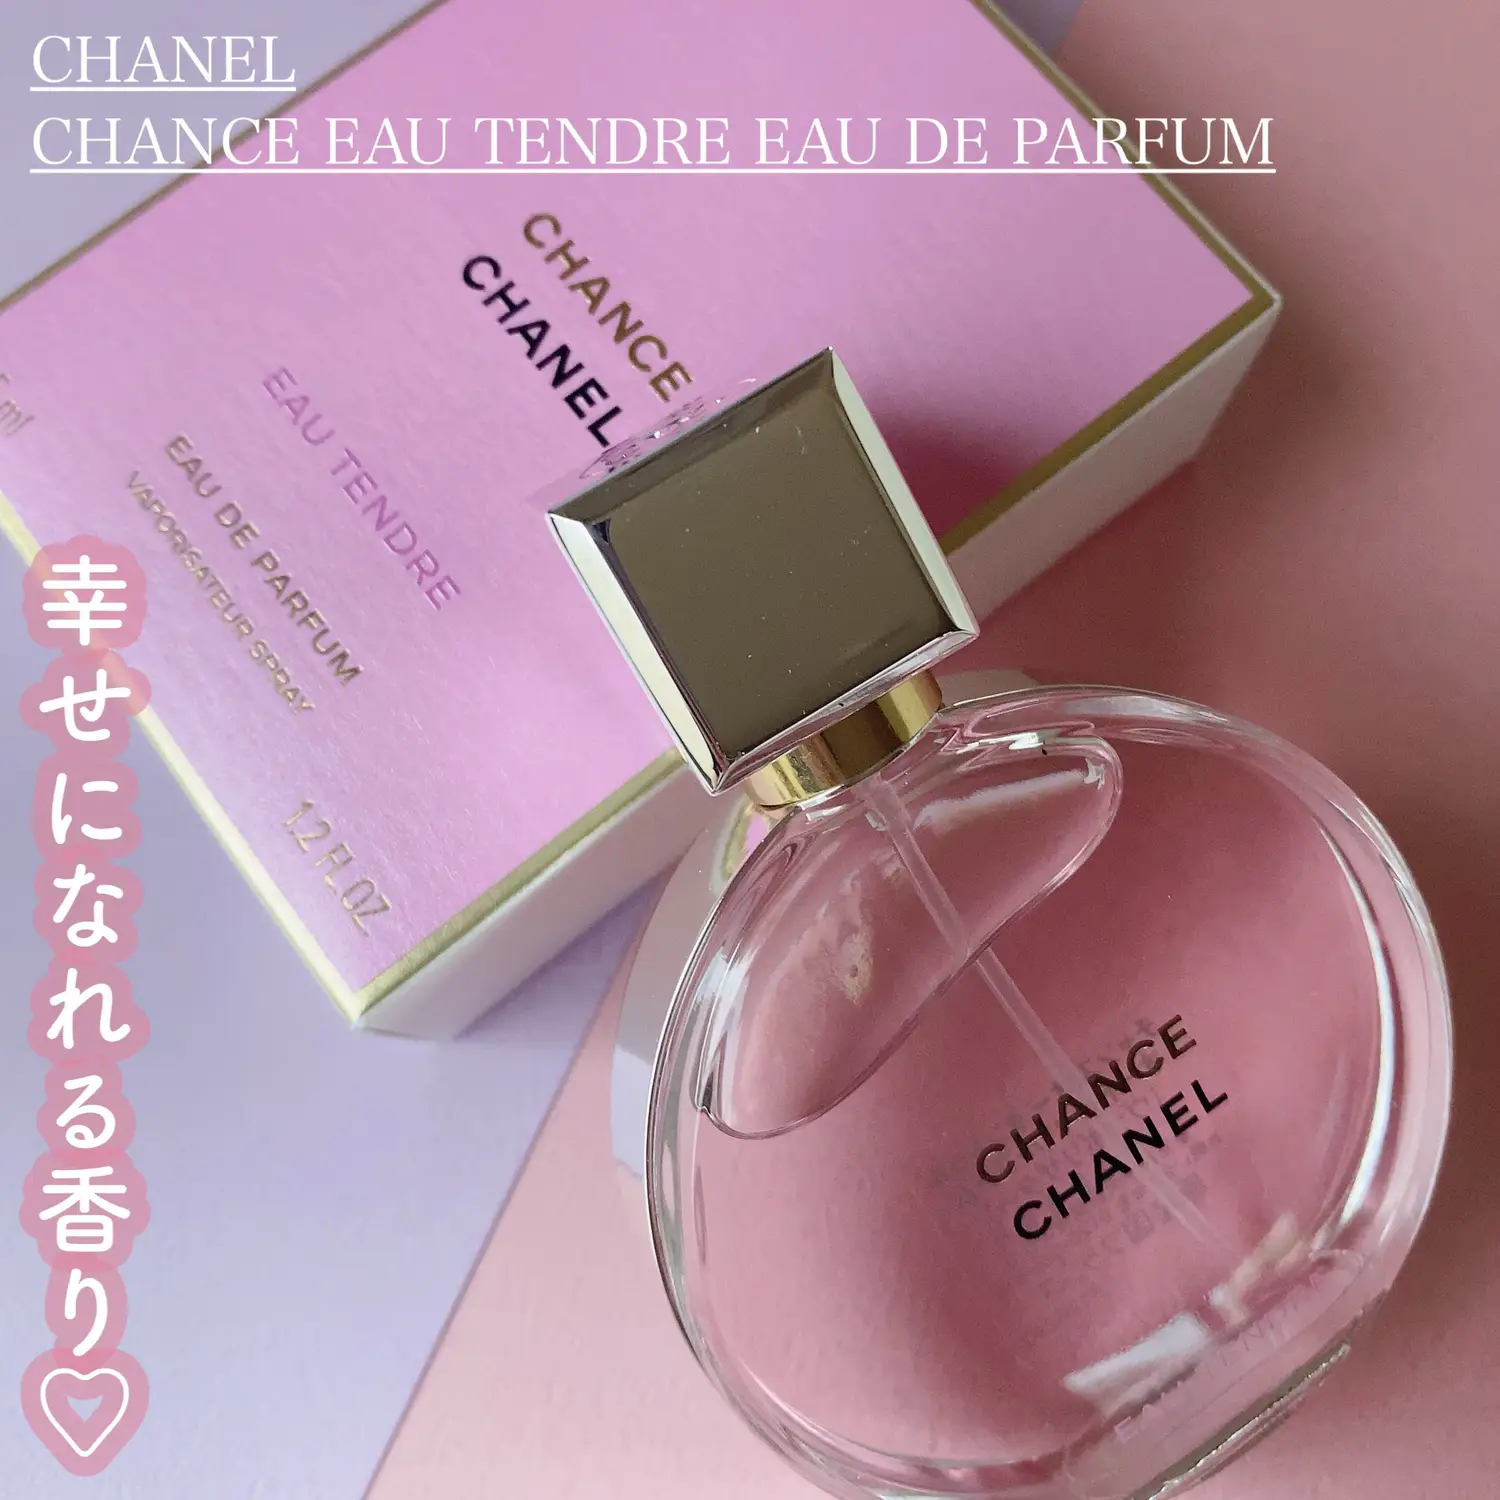 Unboxing the new #chanelbeauty chance eau fraiche EDP! Just